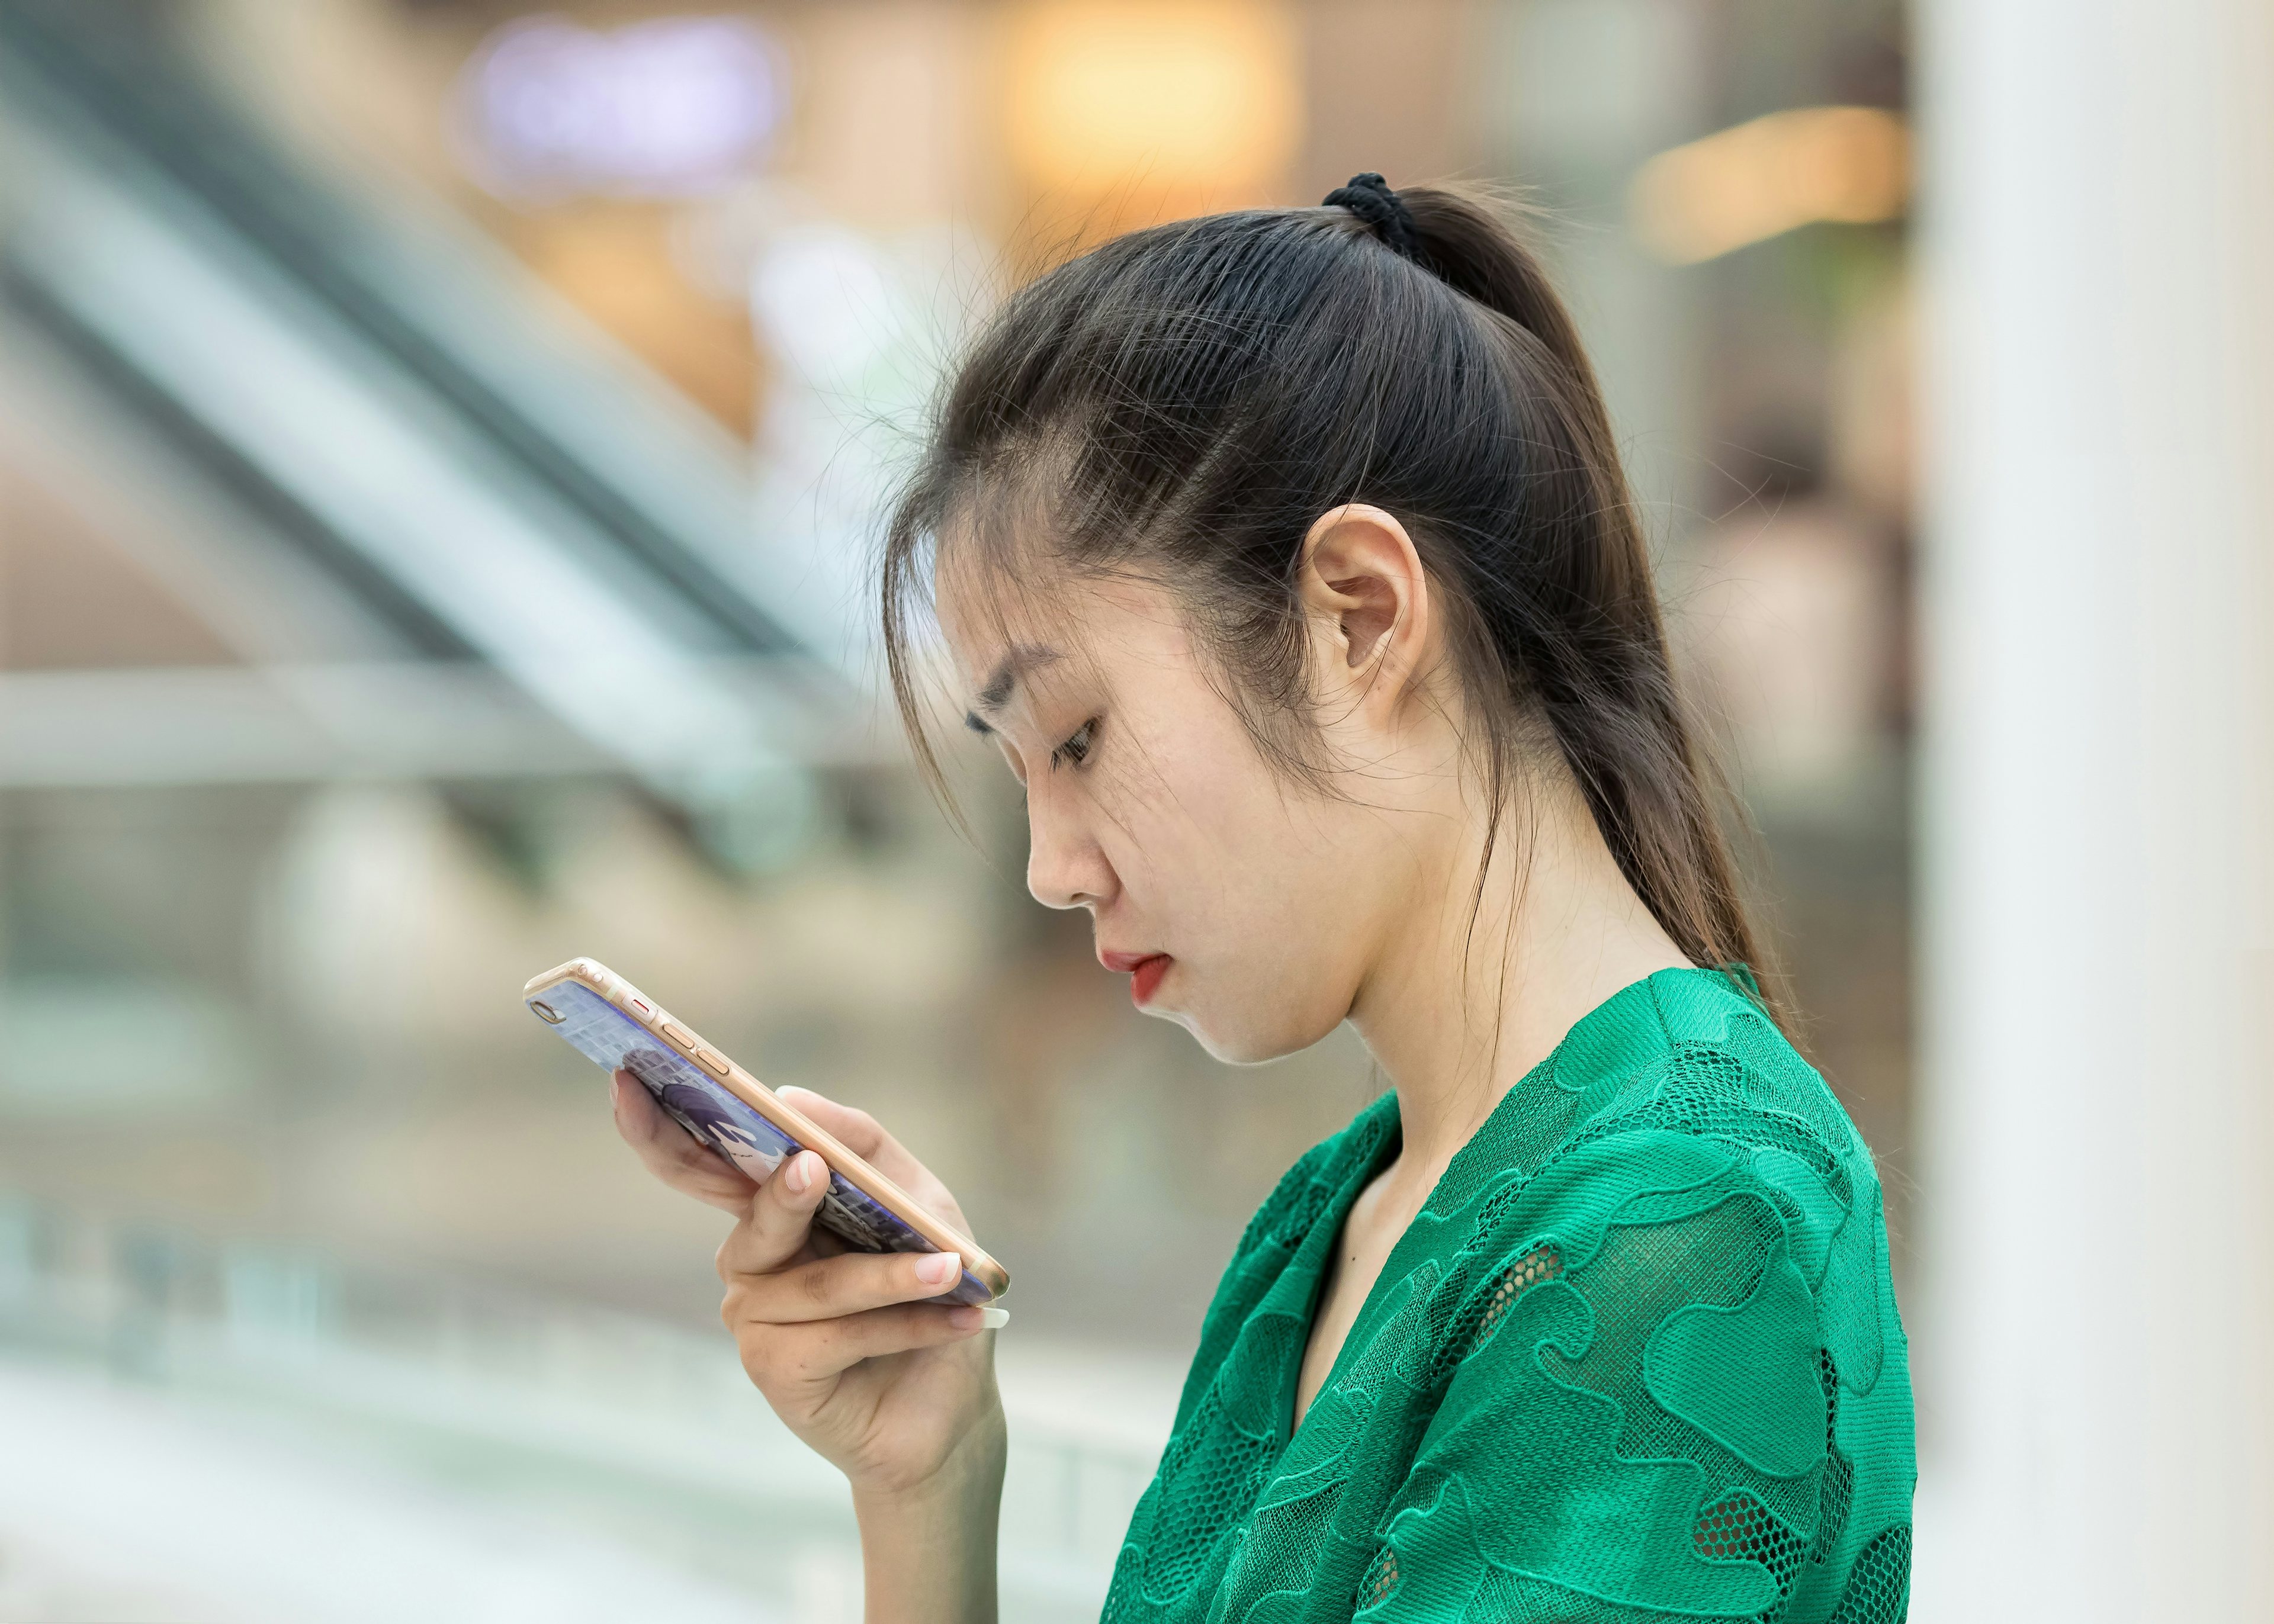 A girl looks at her smartphone in Beijing. (Shutterstock)